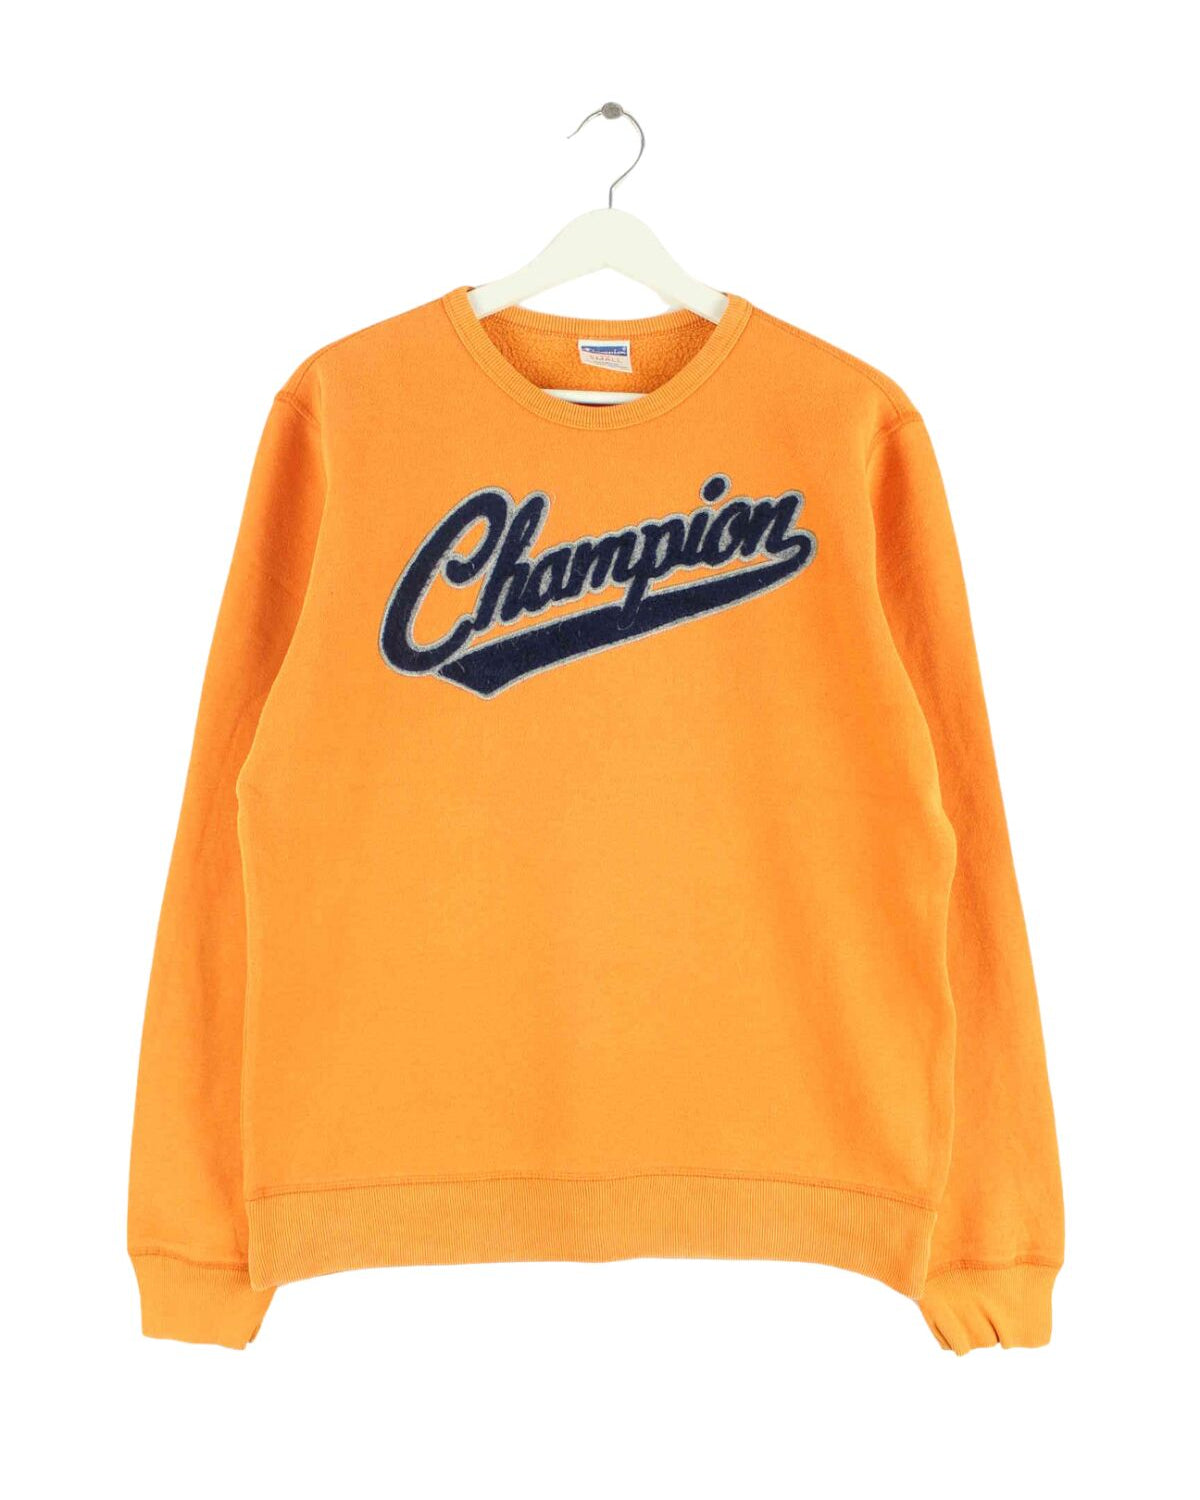 Champion Embroidered Logo Sweater Orange S (front image)